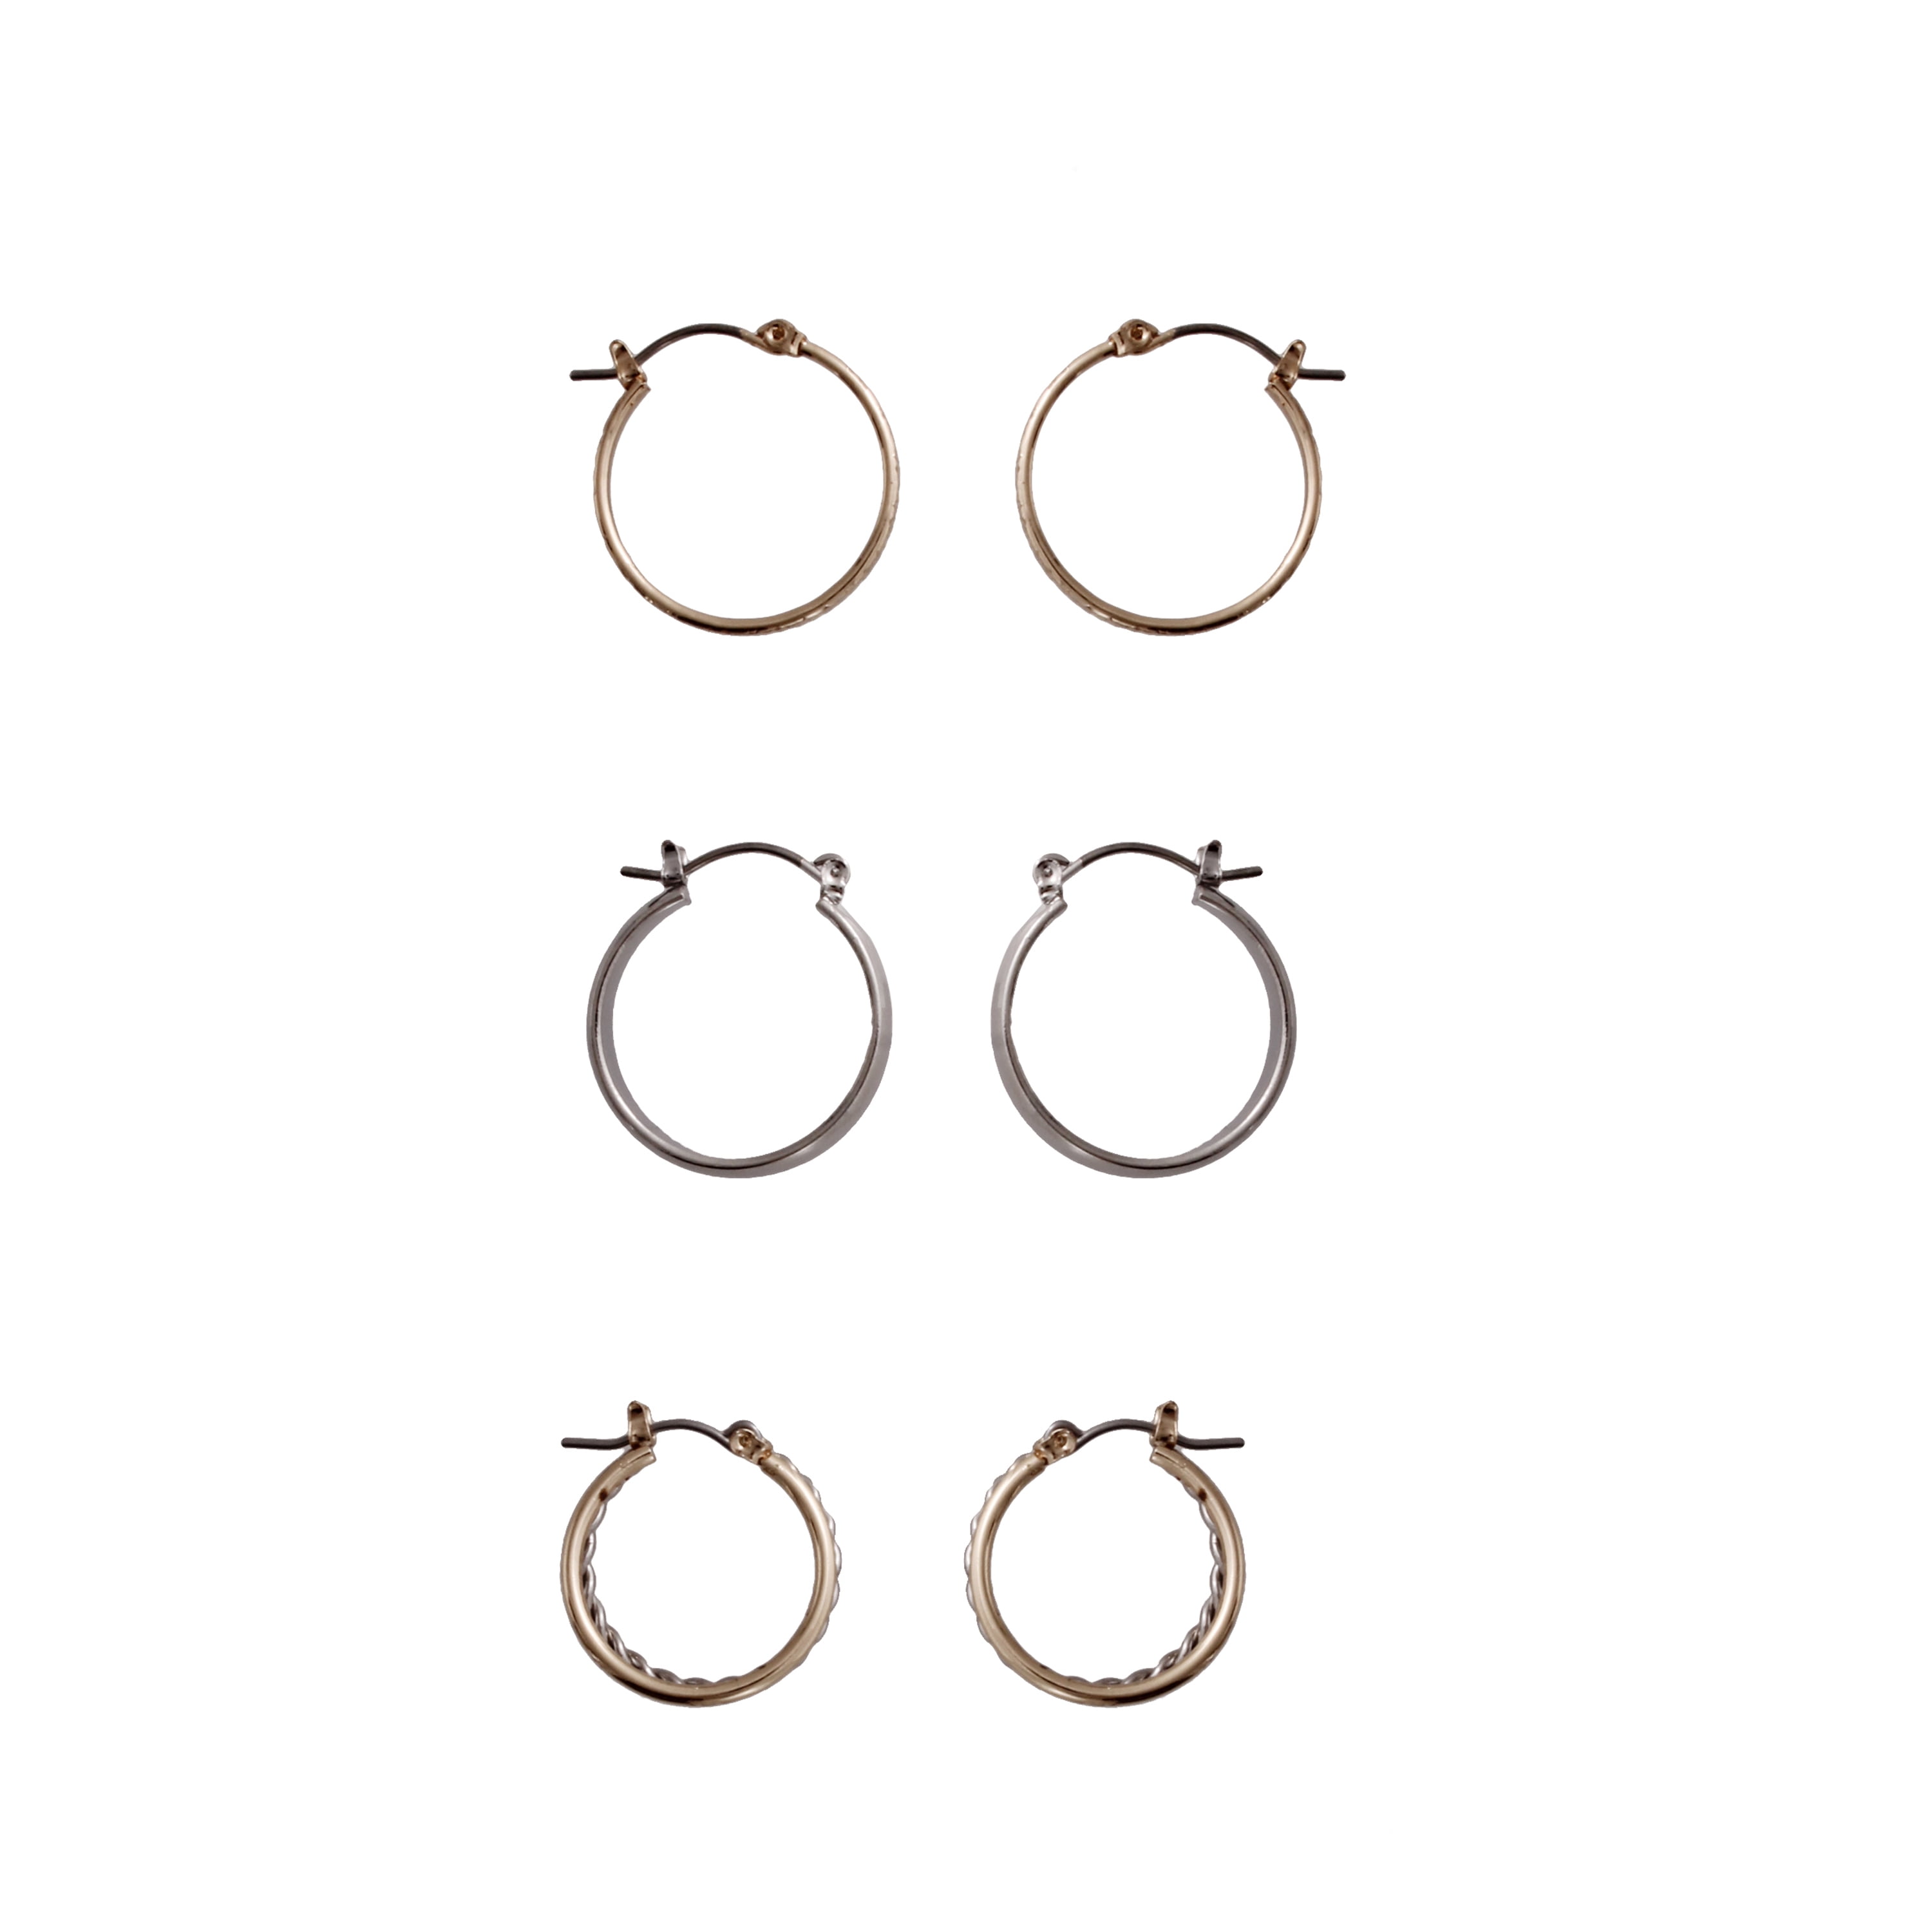 Dangling Hoop Earrings Trio of Sparkle large trio oval drop earrings 14k gold filled or sterling silver